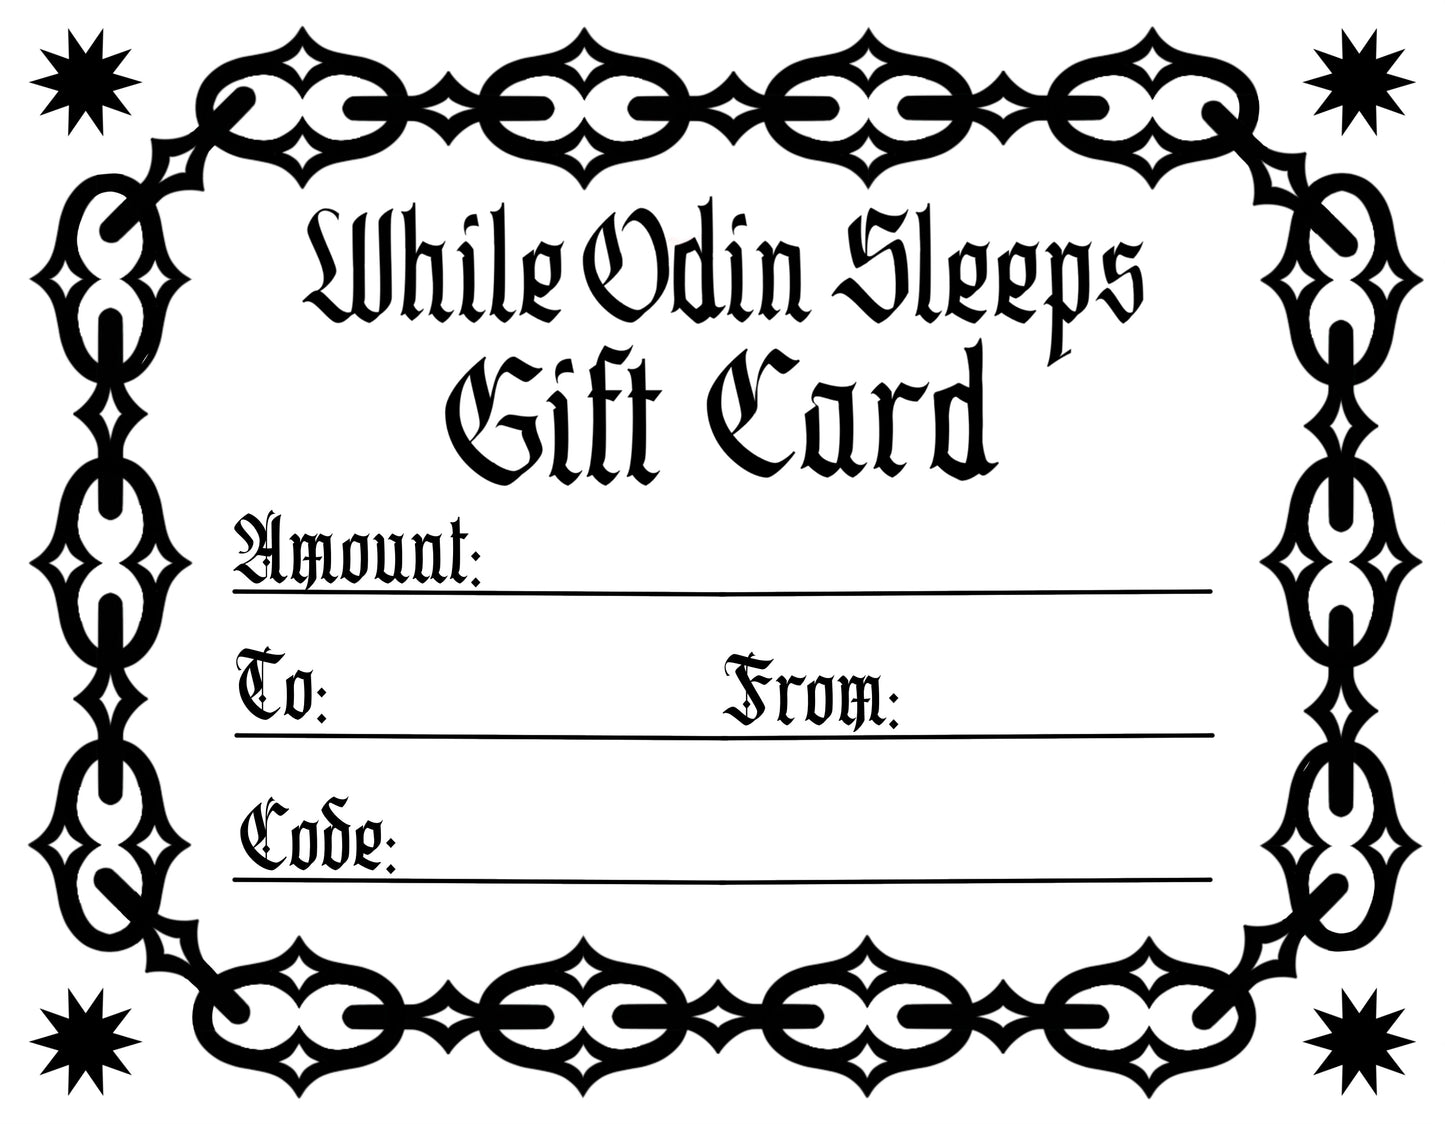 Gift Card - While Odin Sleeps